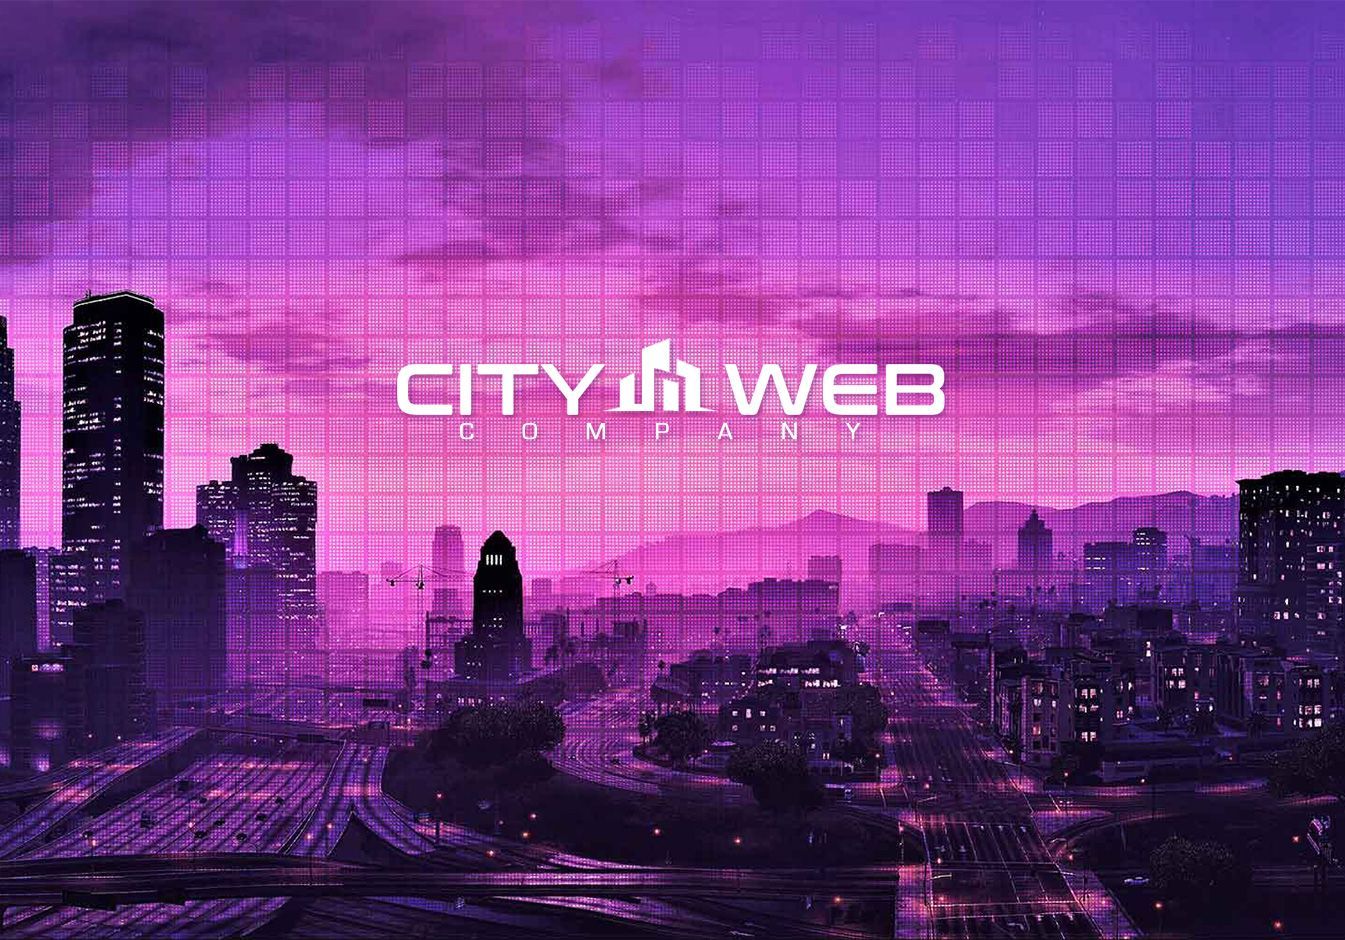 (c) Citywebcompany.com